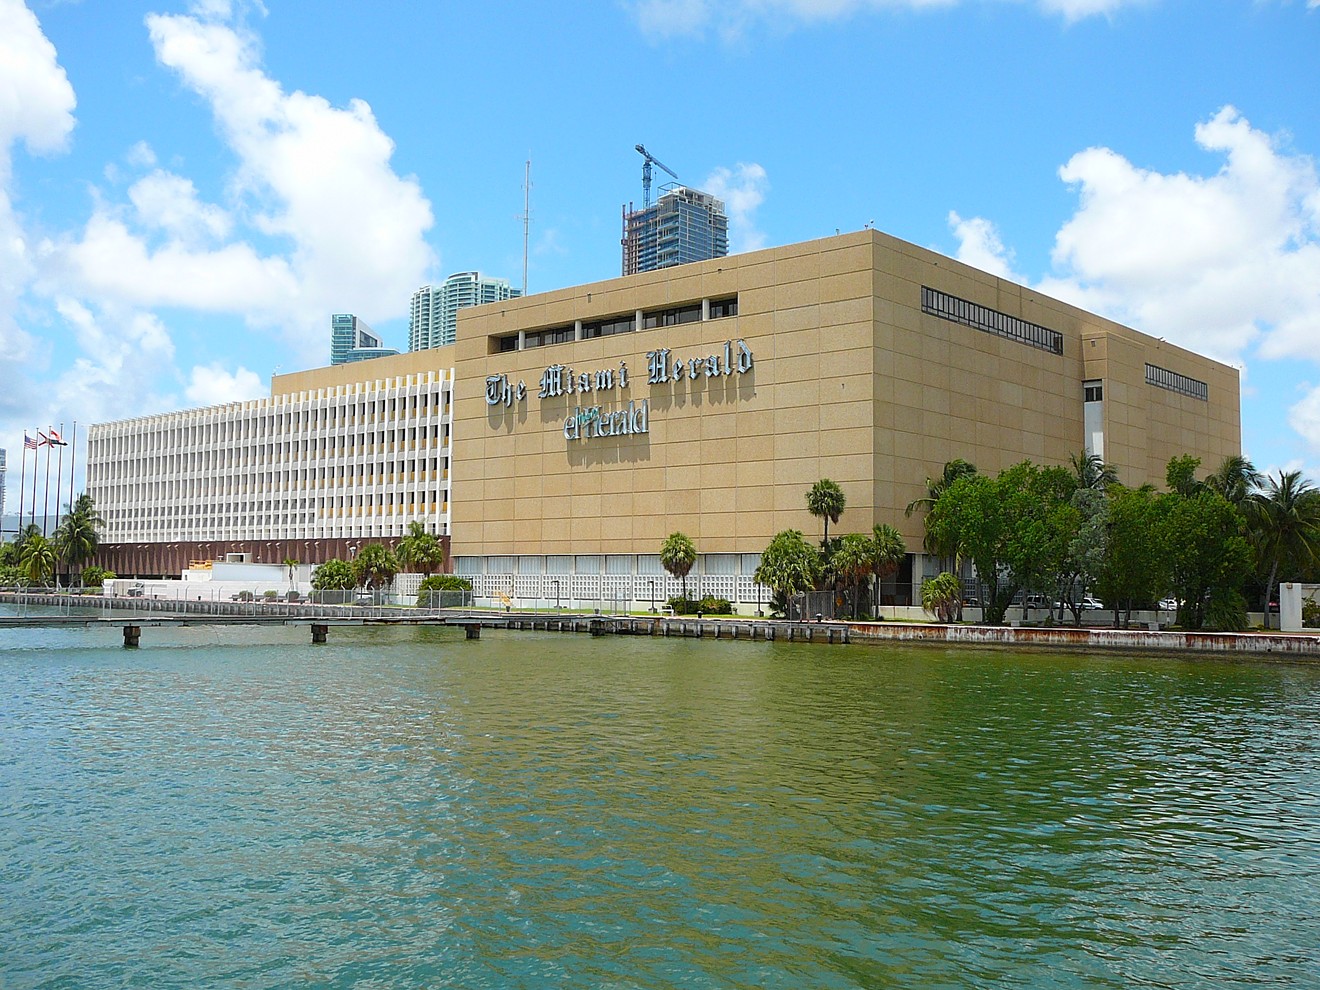 The old Miami Herald headquarters.